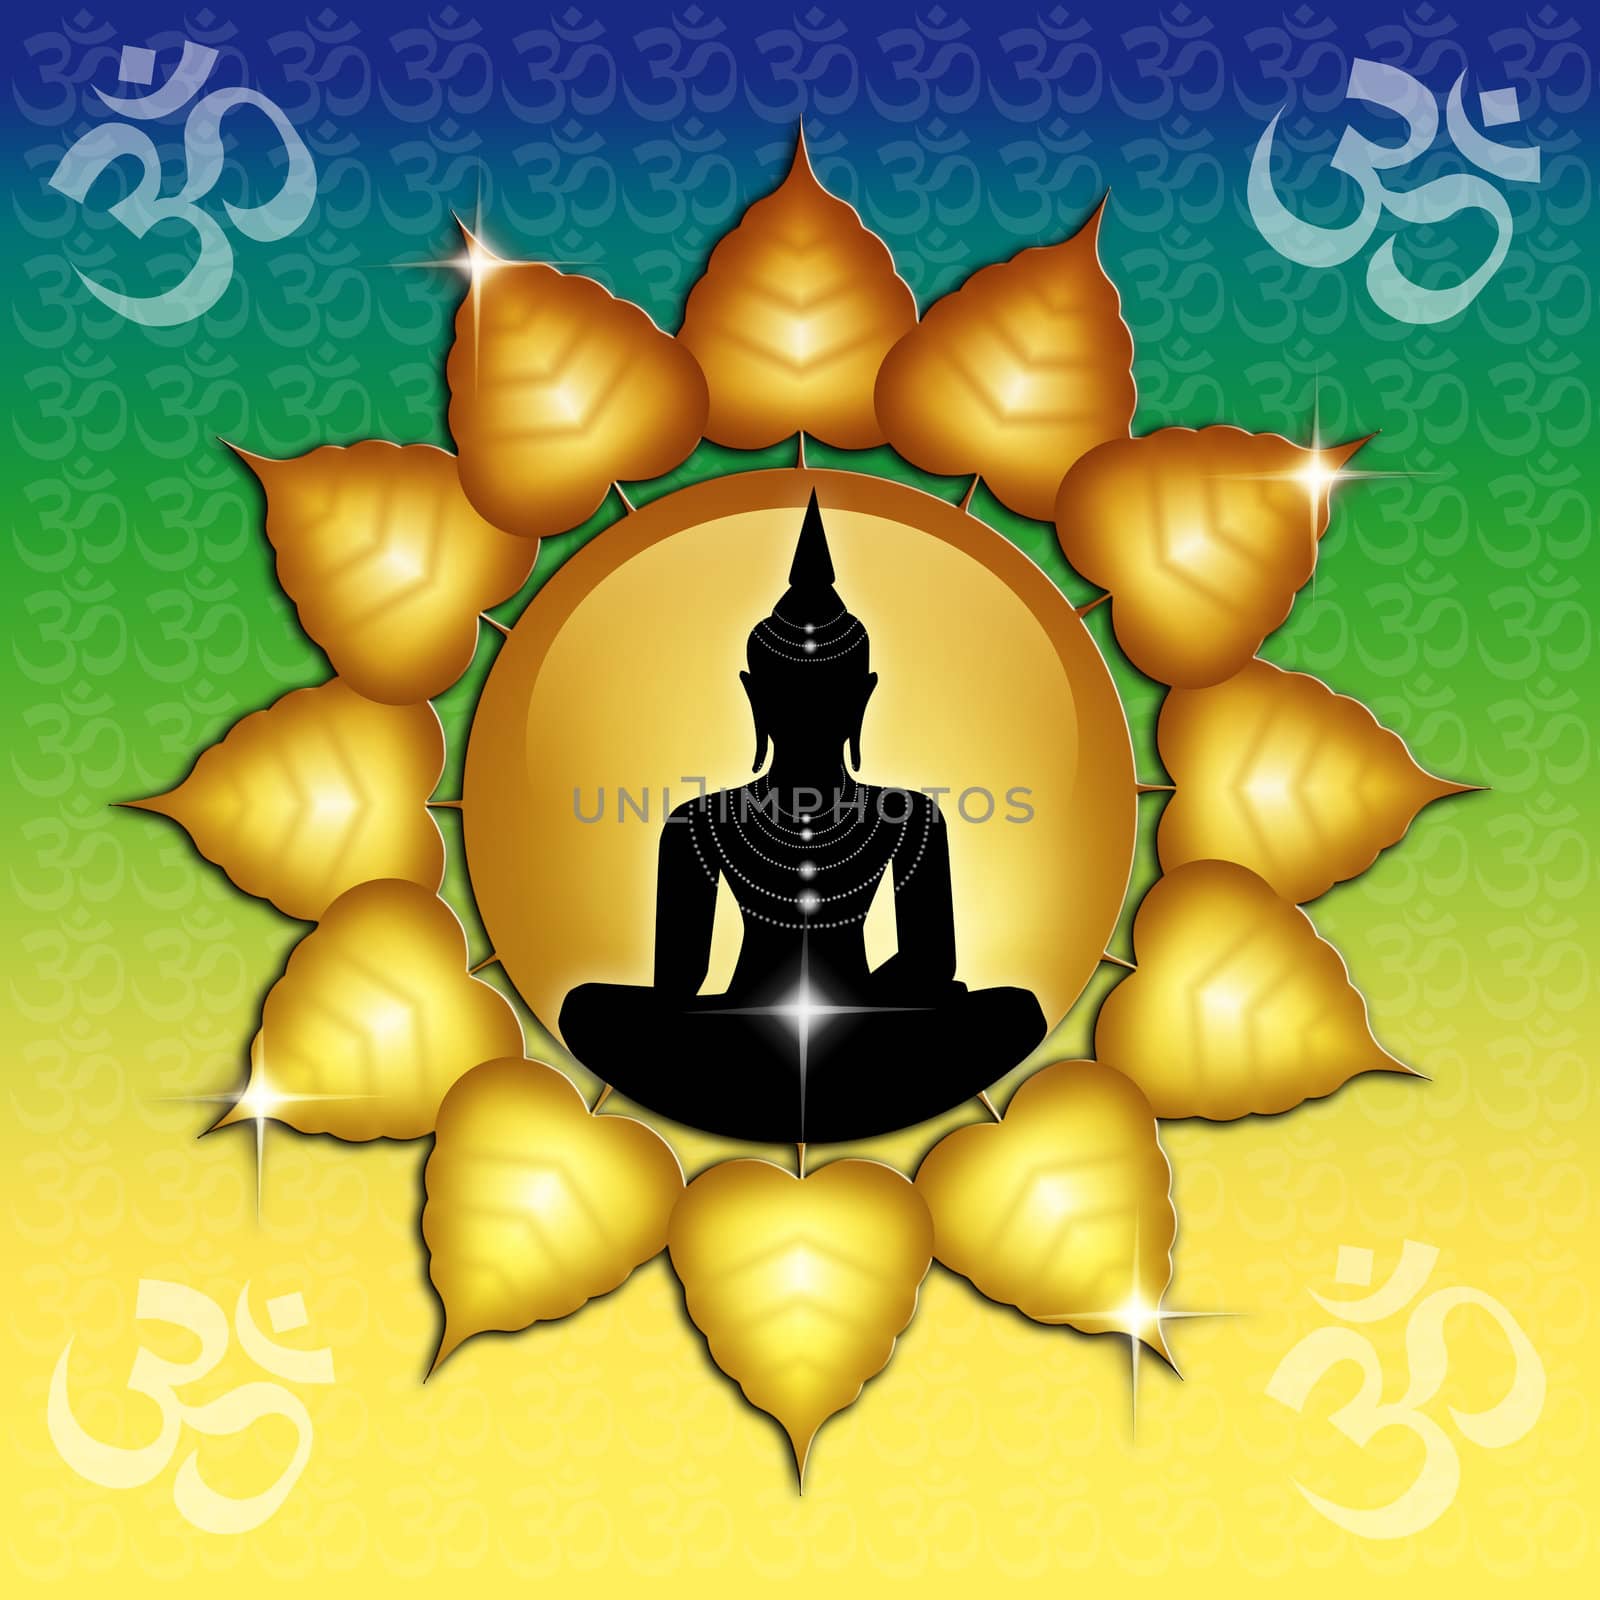 Om symbol and Buddha